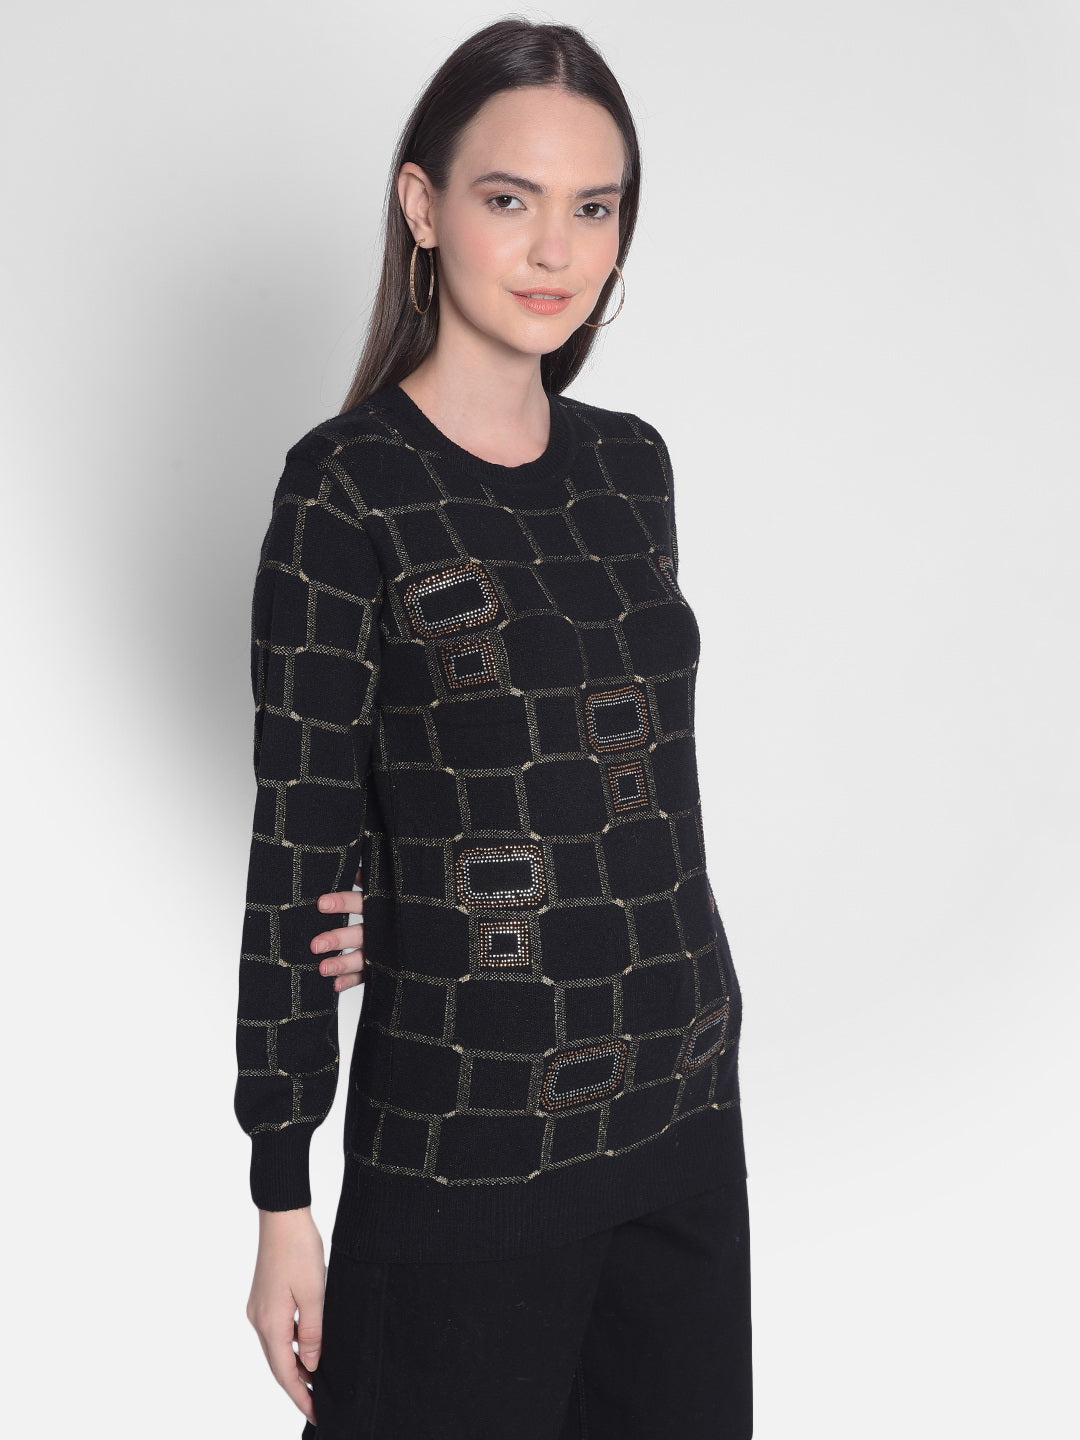 Black Printed Sweater-Women Sweaters-Crimsoune Club